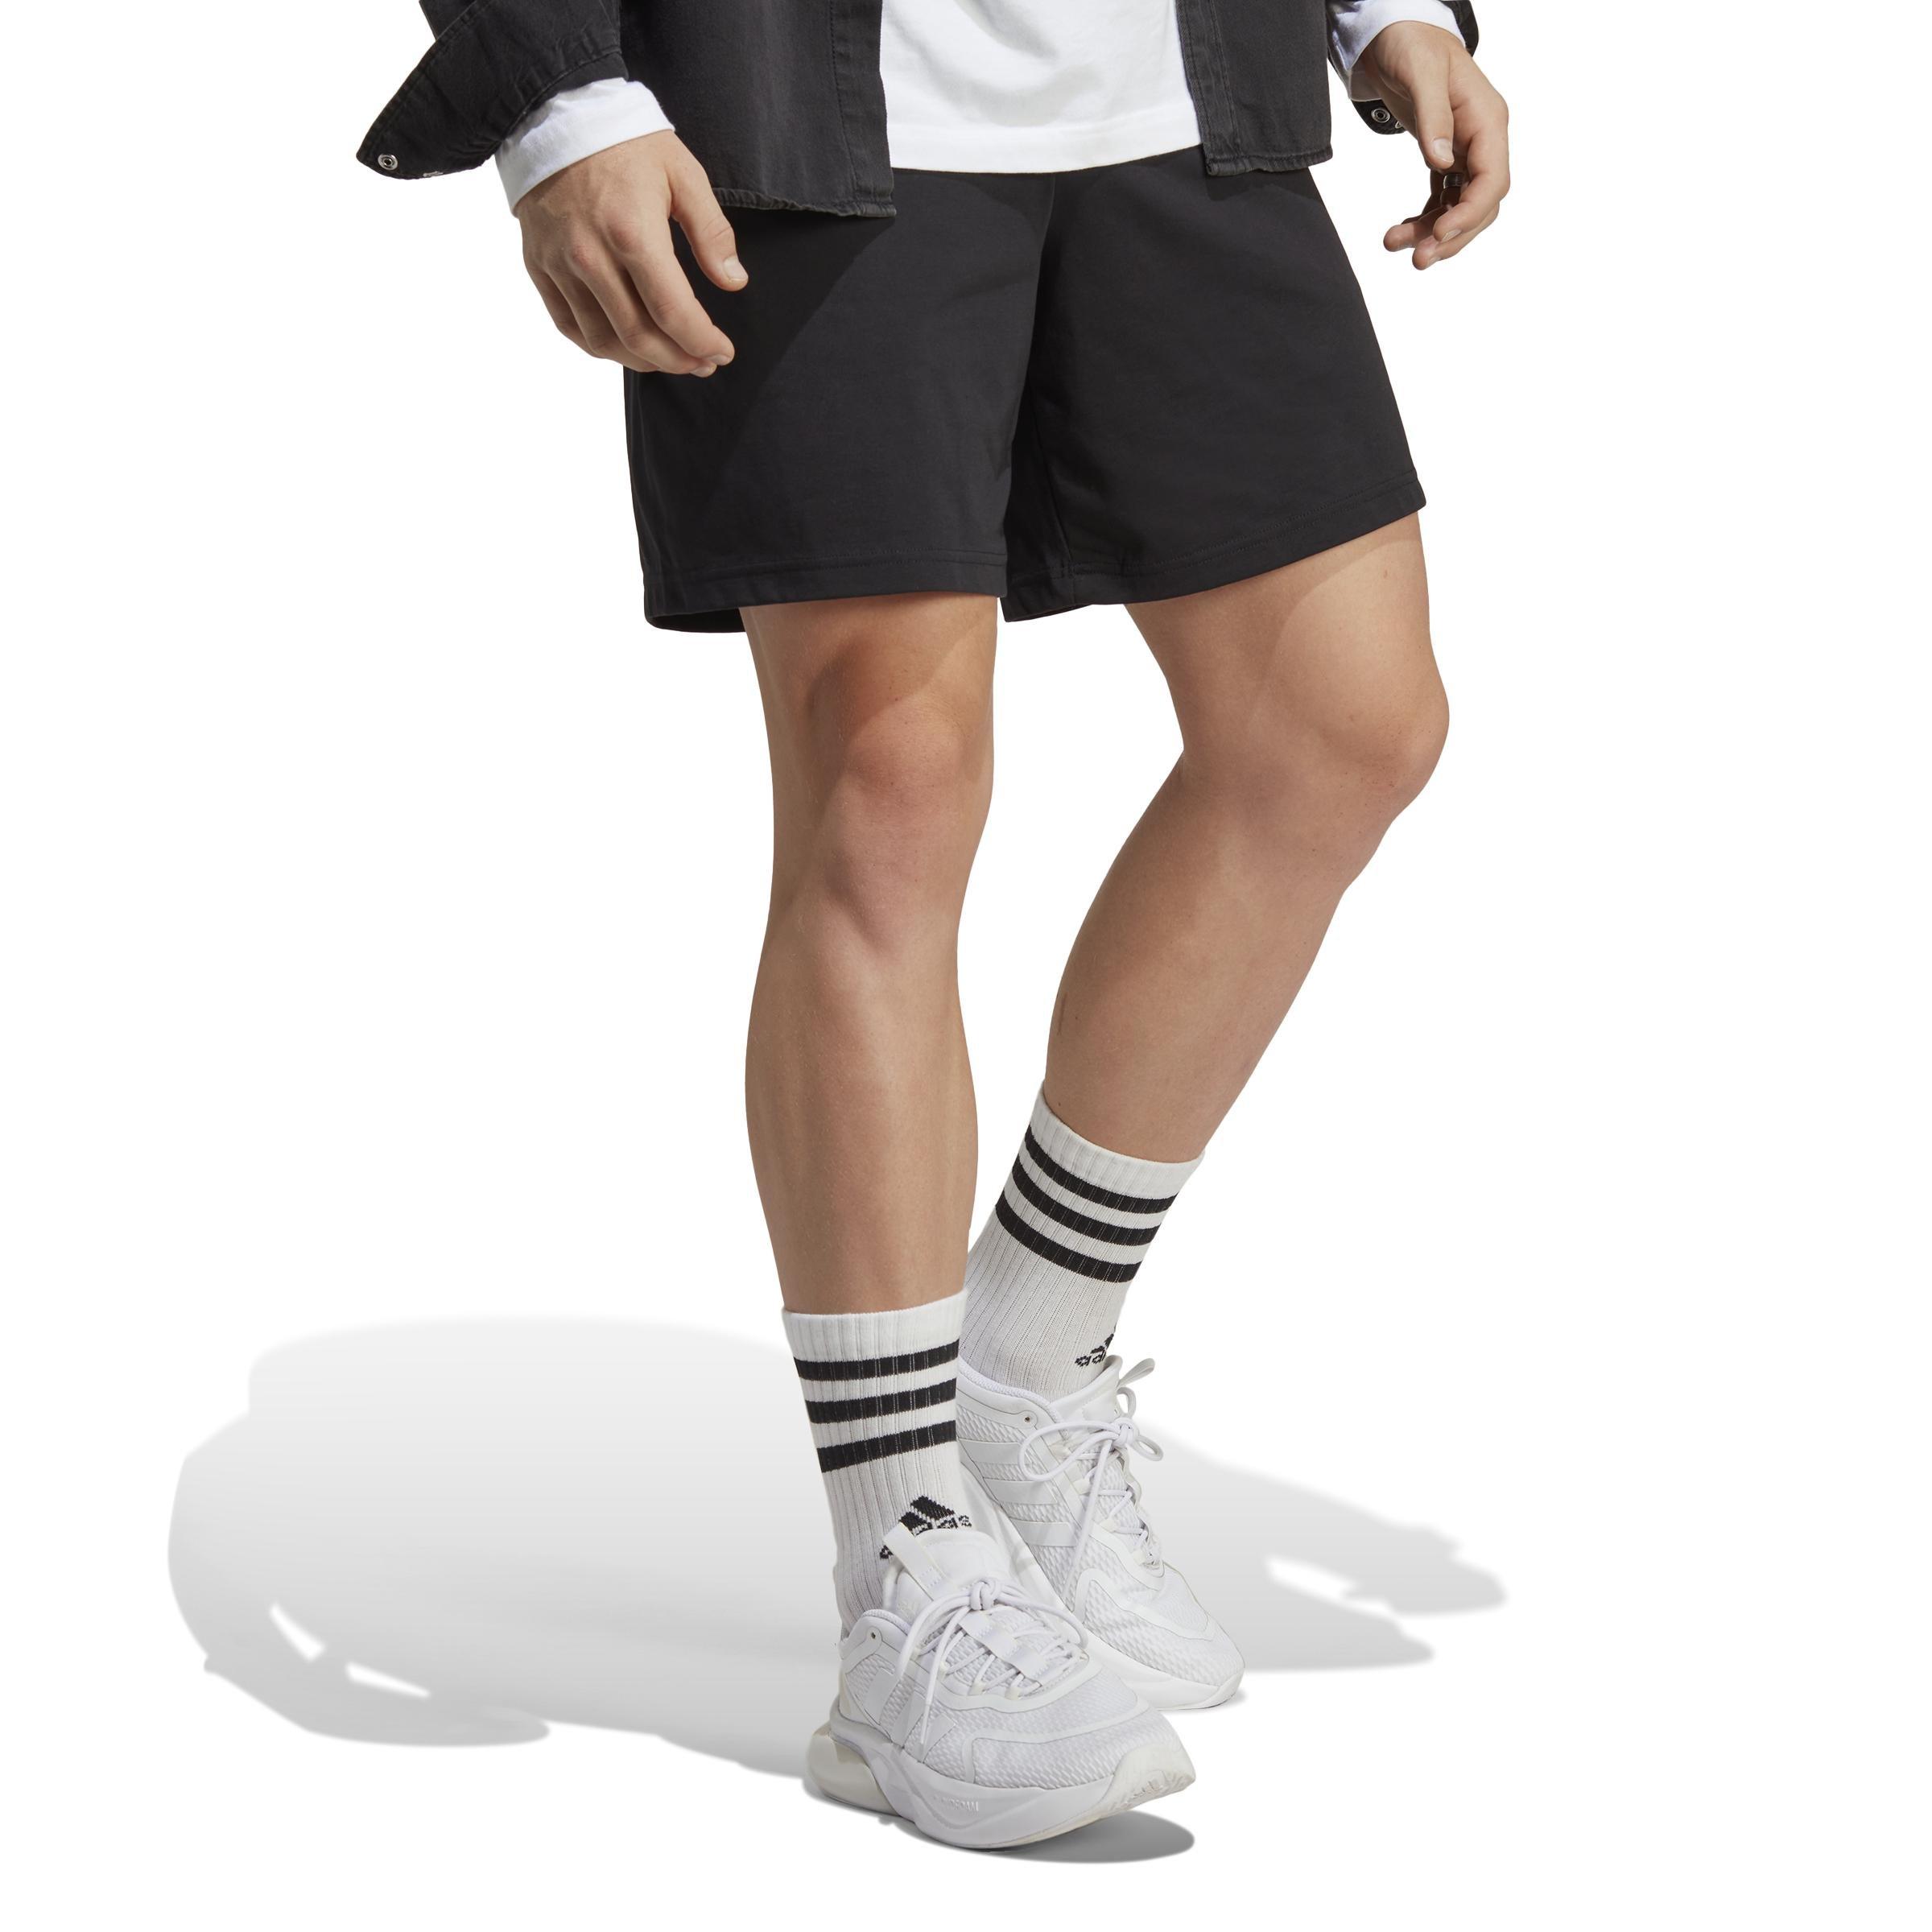 adidas - Men Essentials Logo Shorts, Black